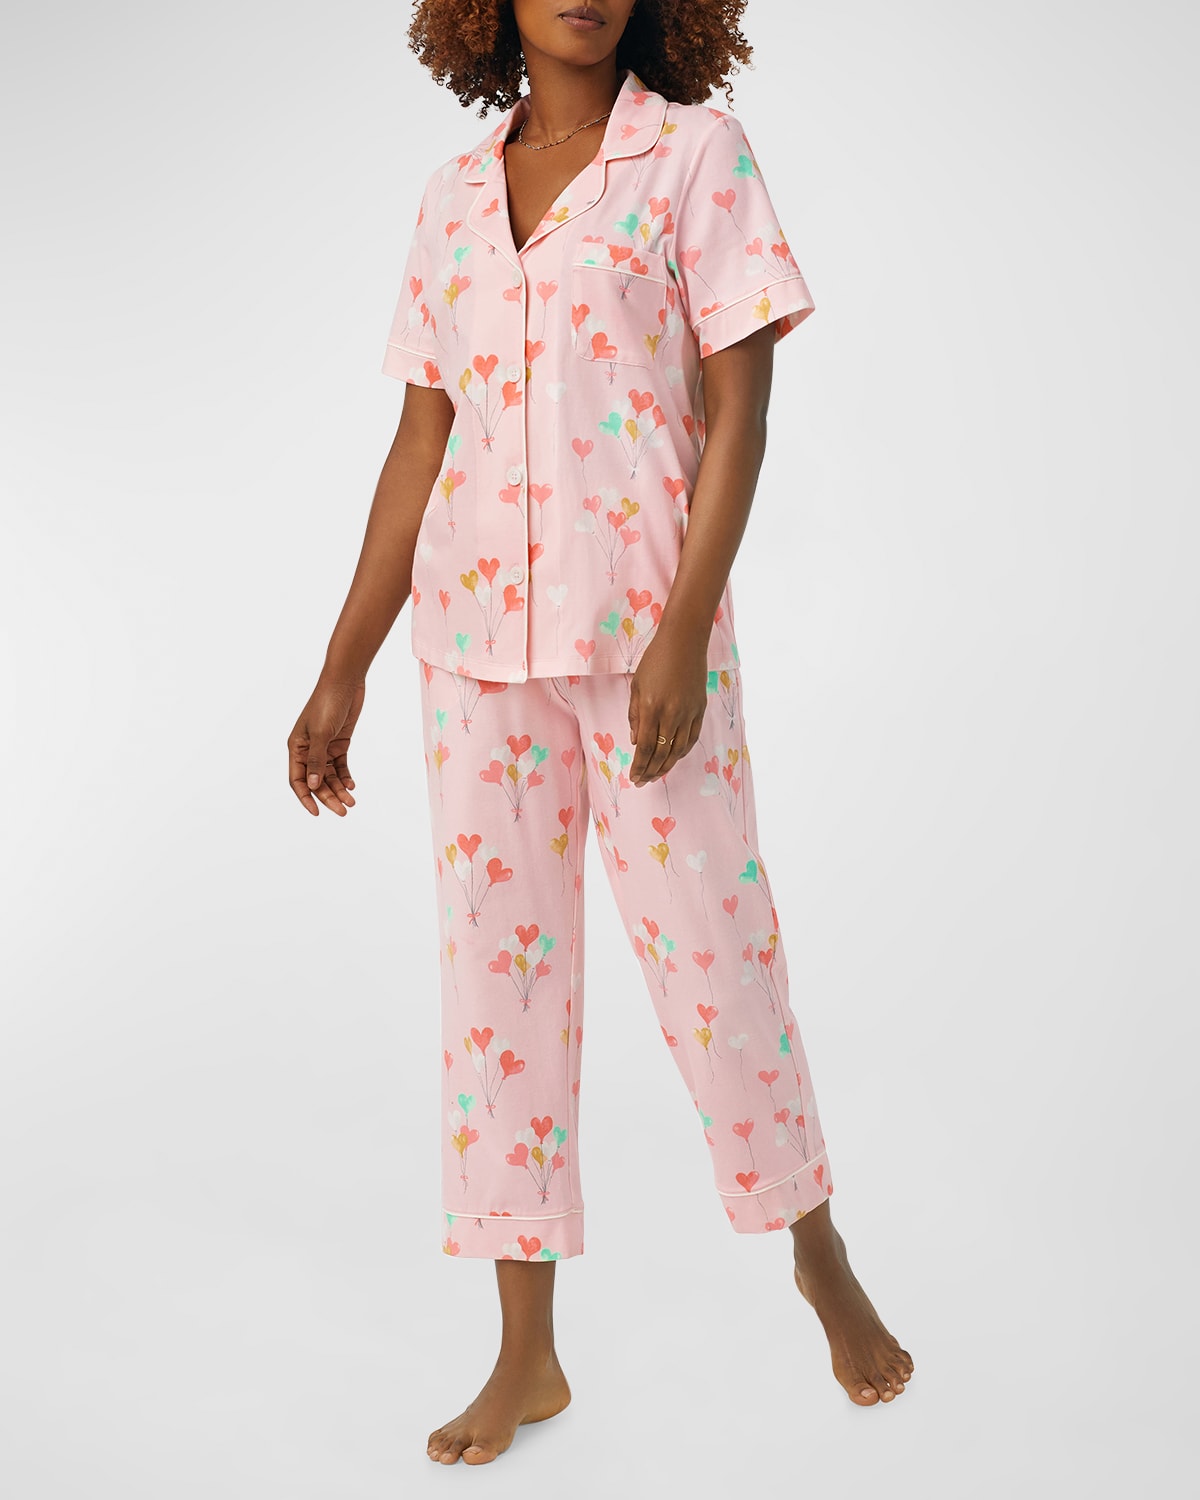 Cropped Heart-Print Pajama set